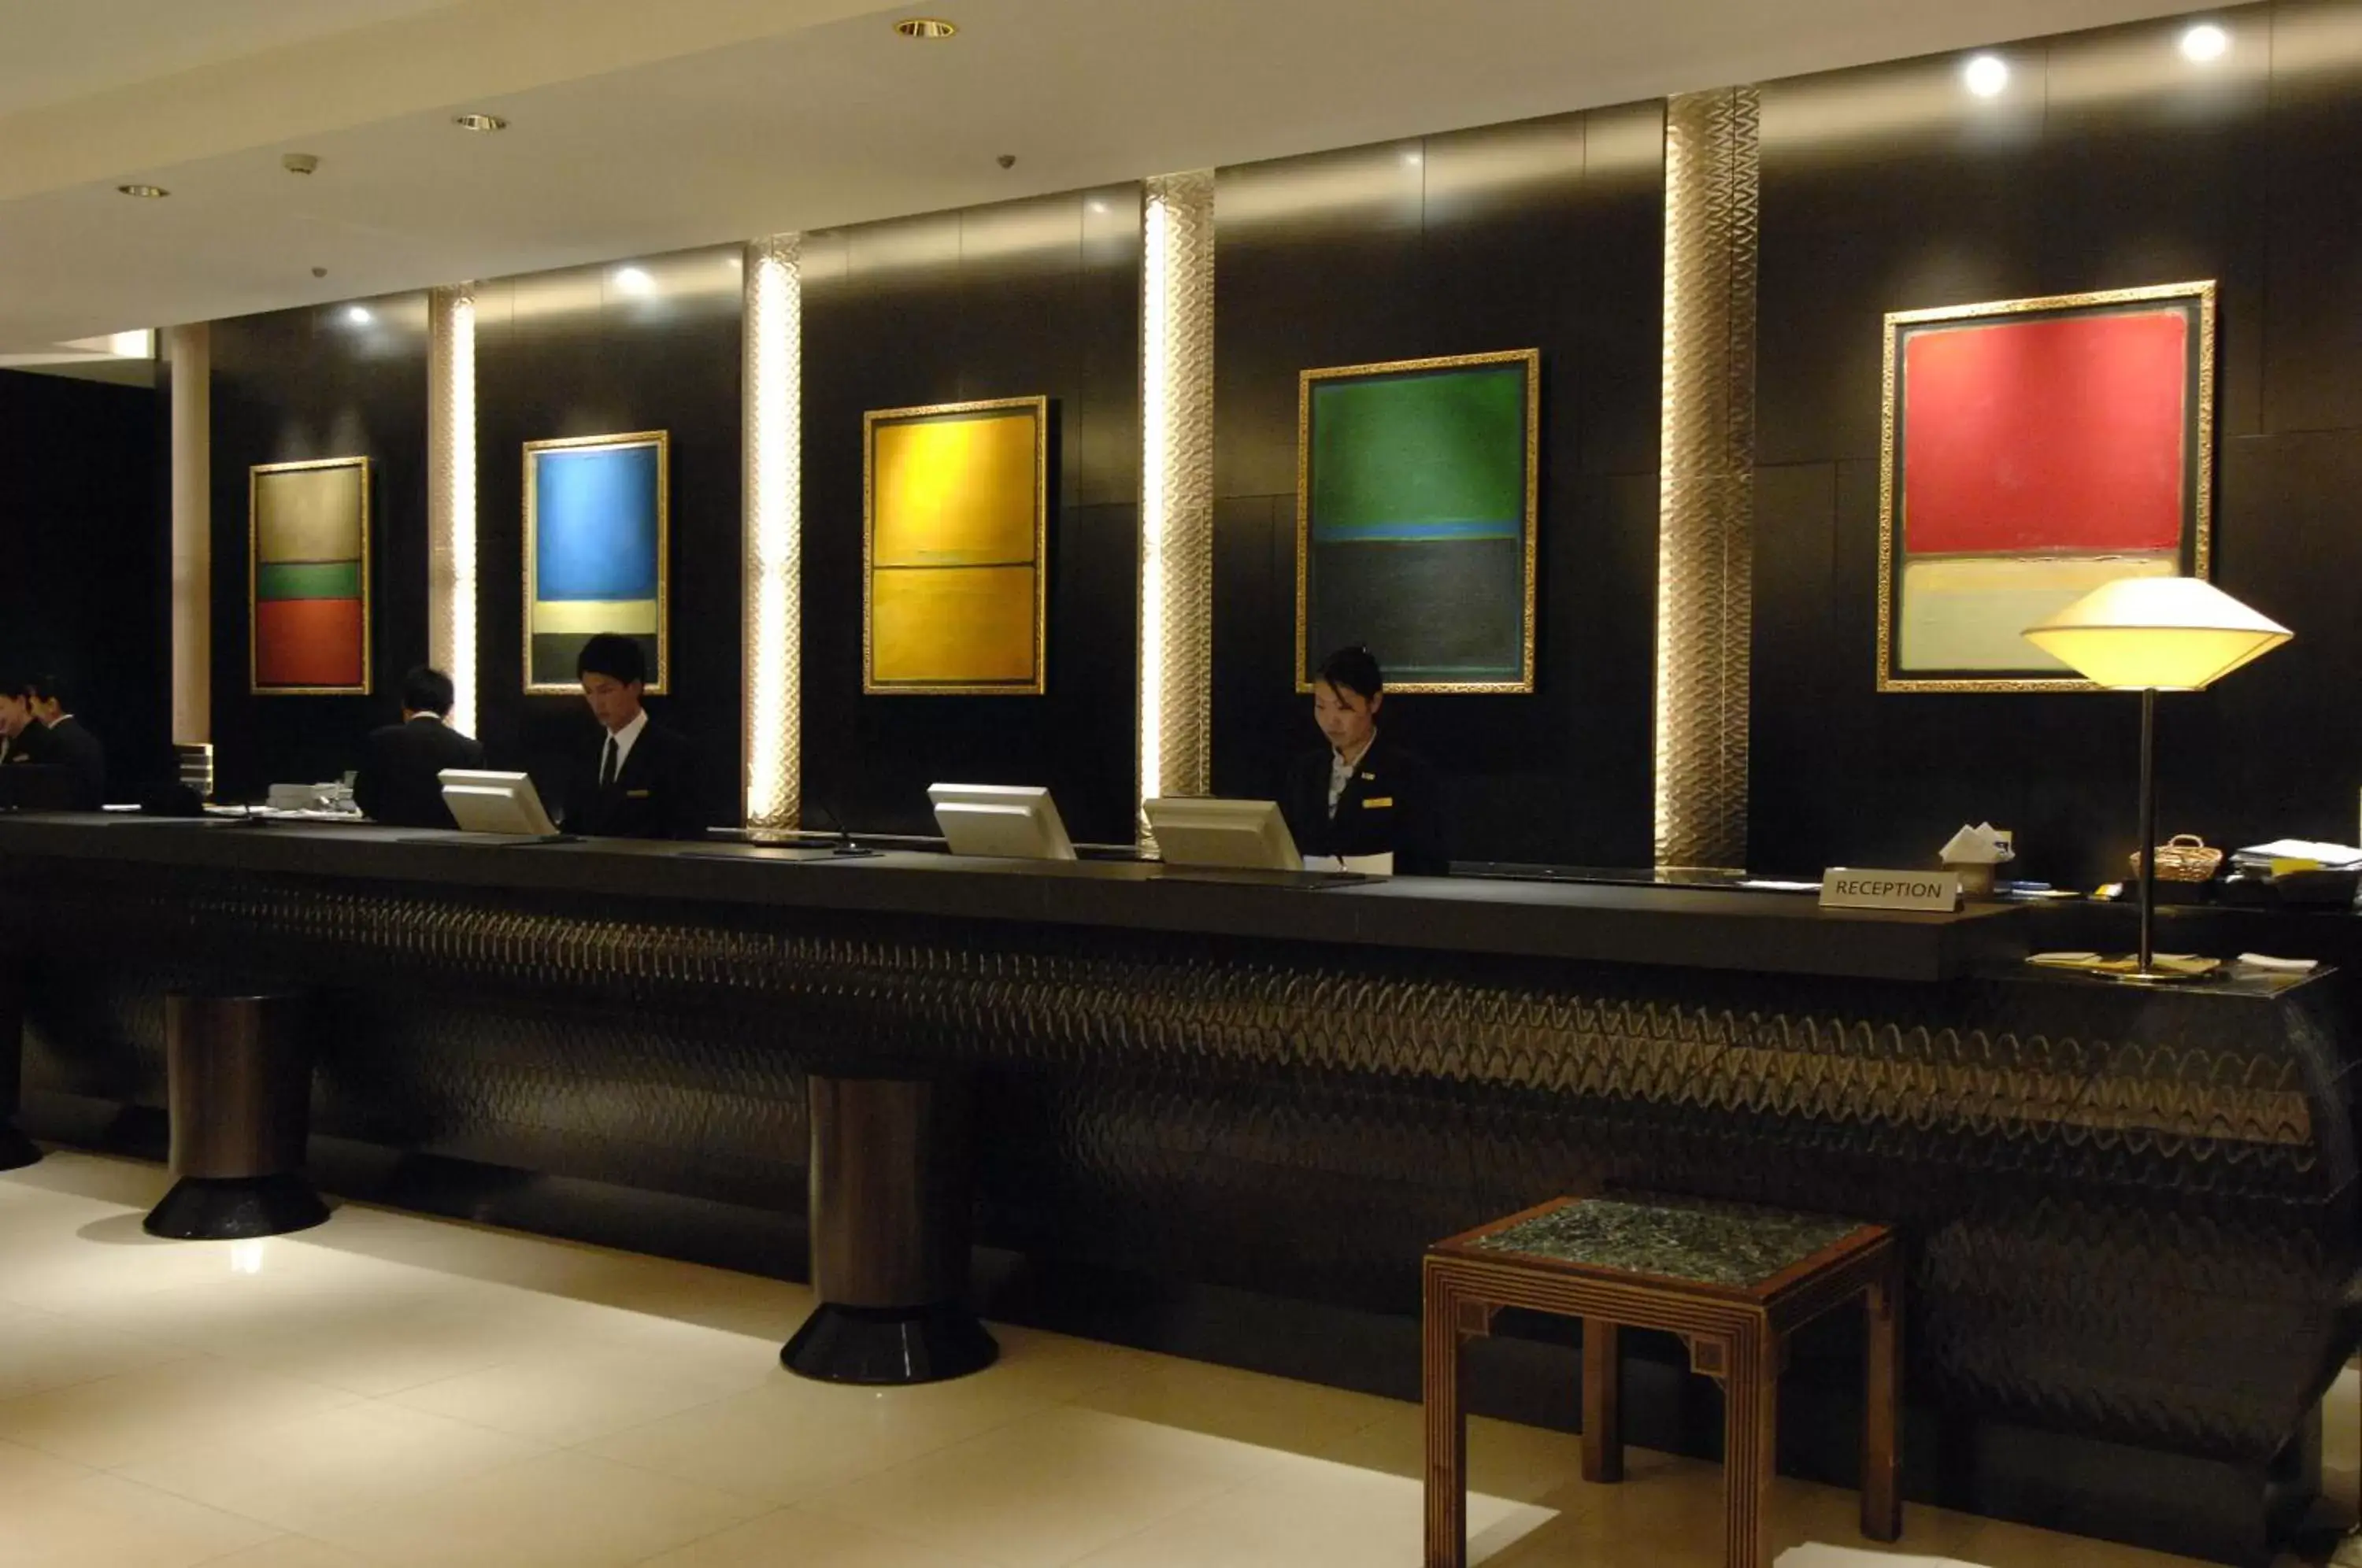 Lobby or reception in Sapporo Grand Hotel